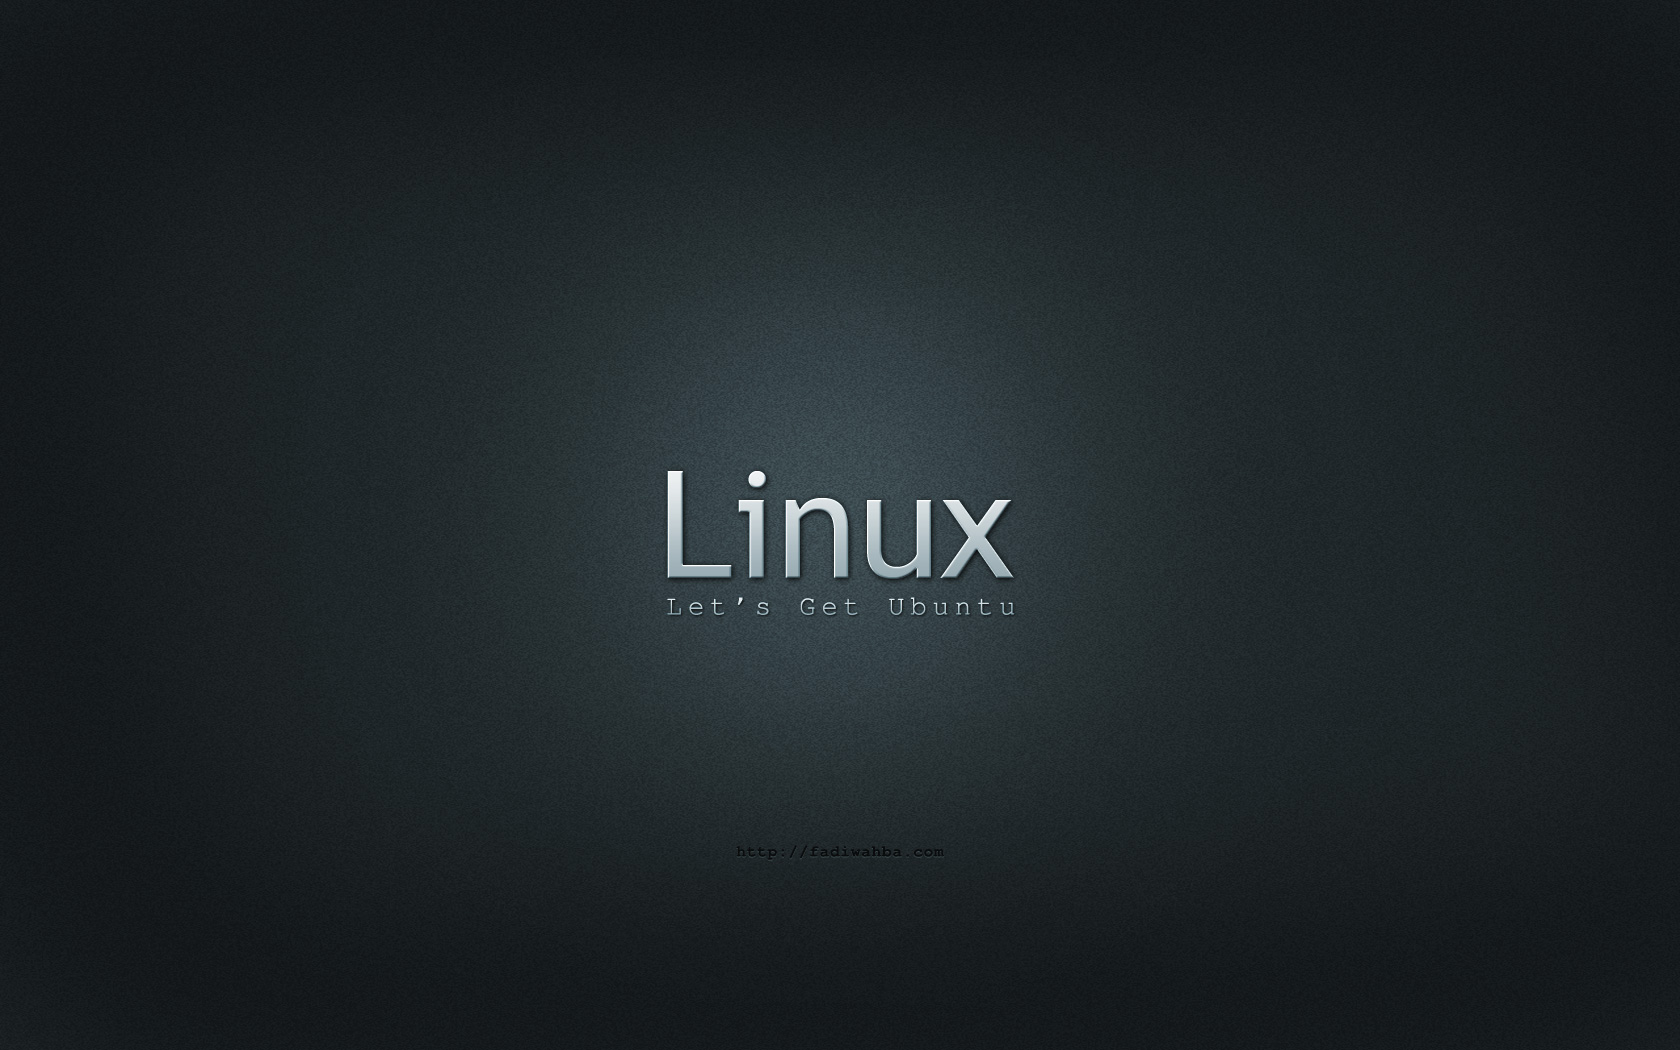 Linux wallpaper 1680x1050 42277